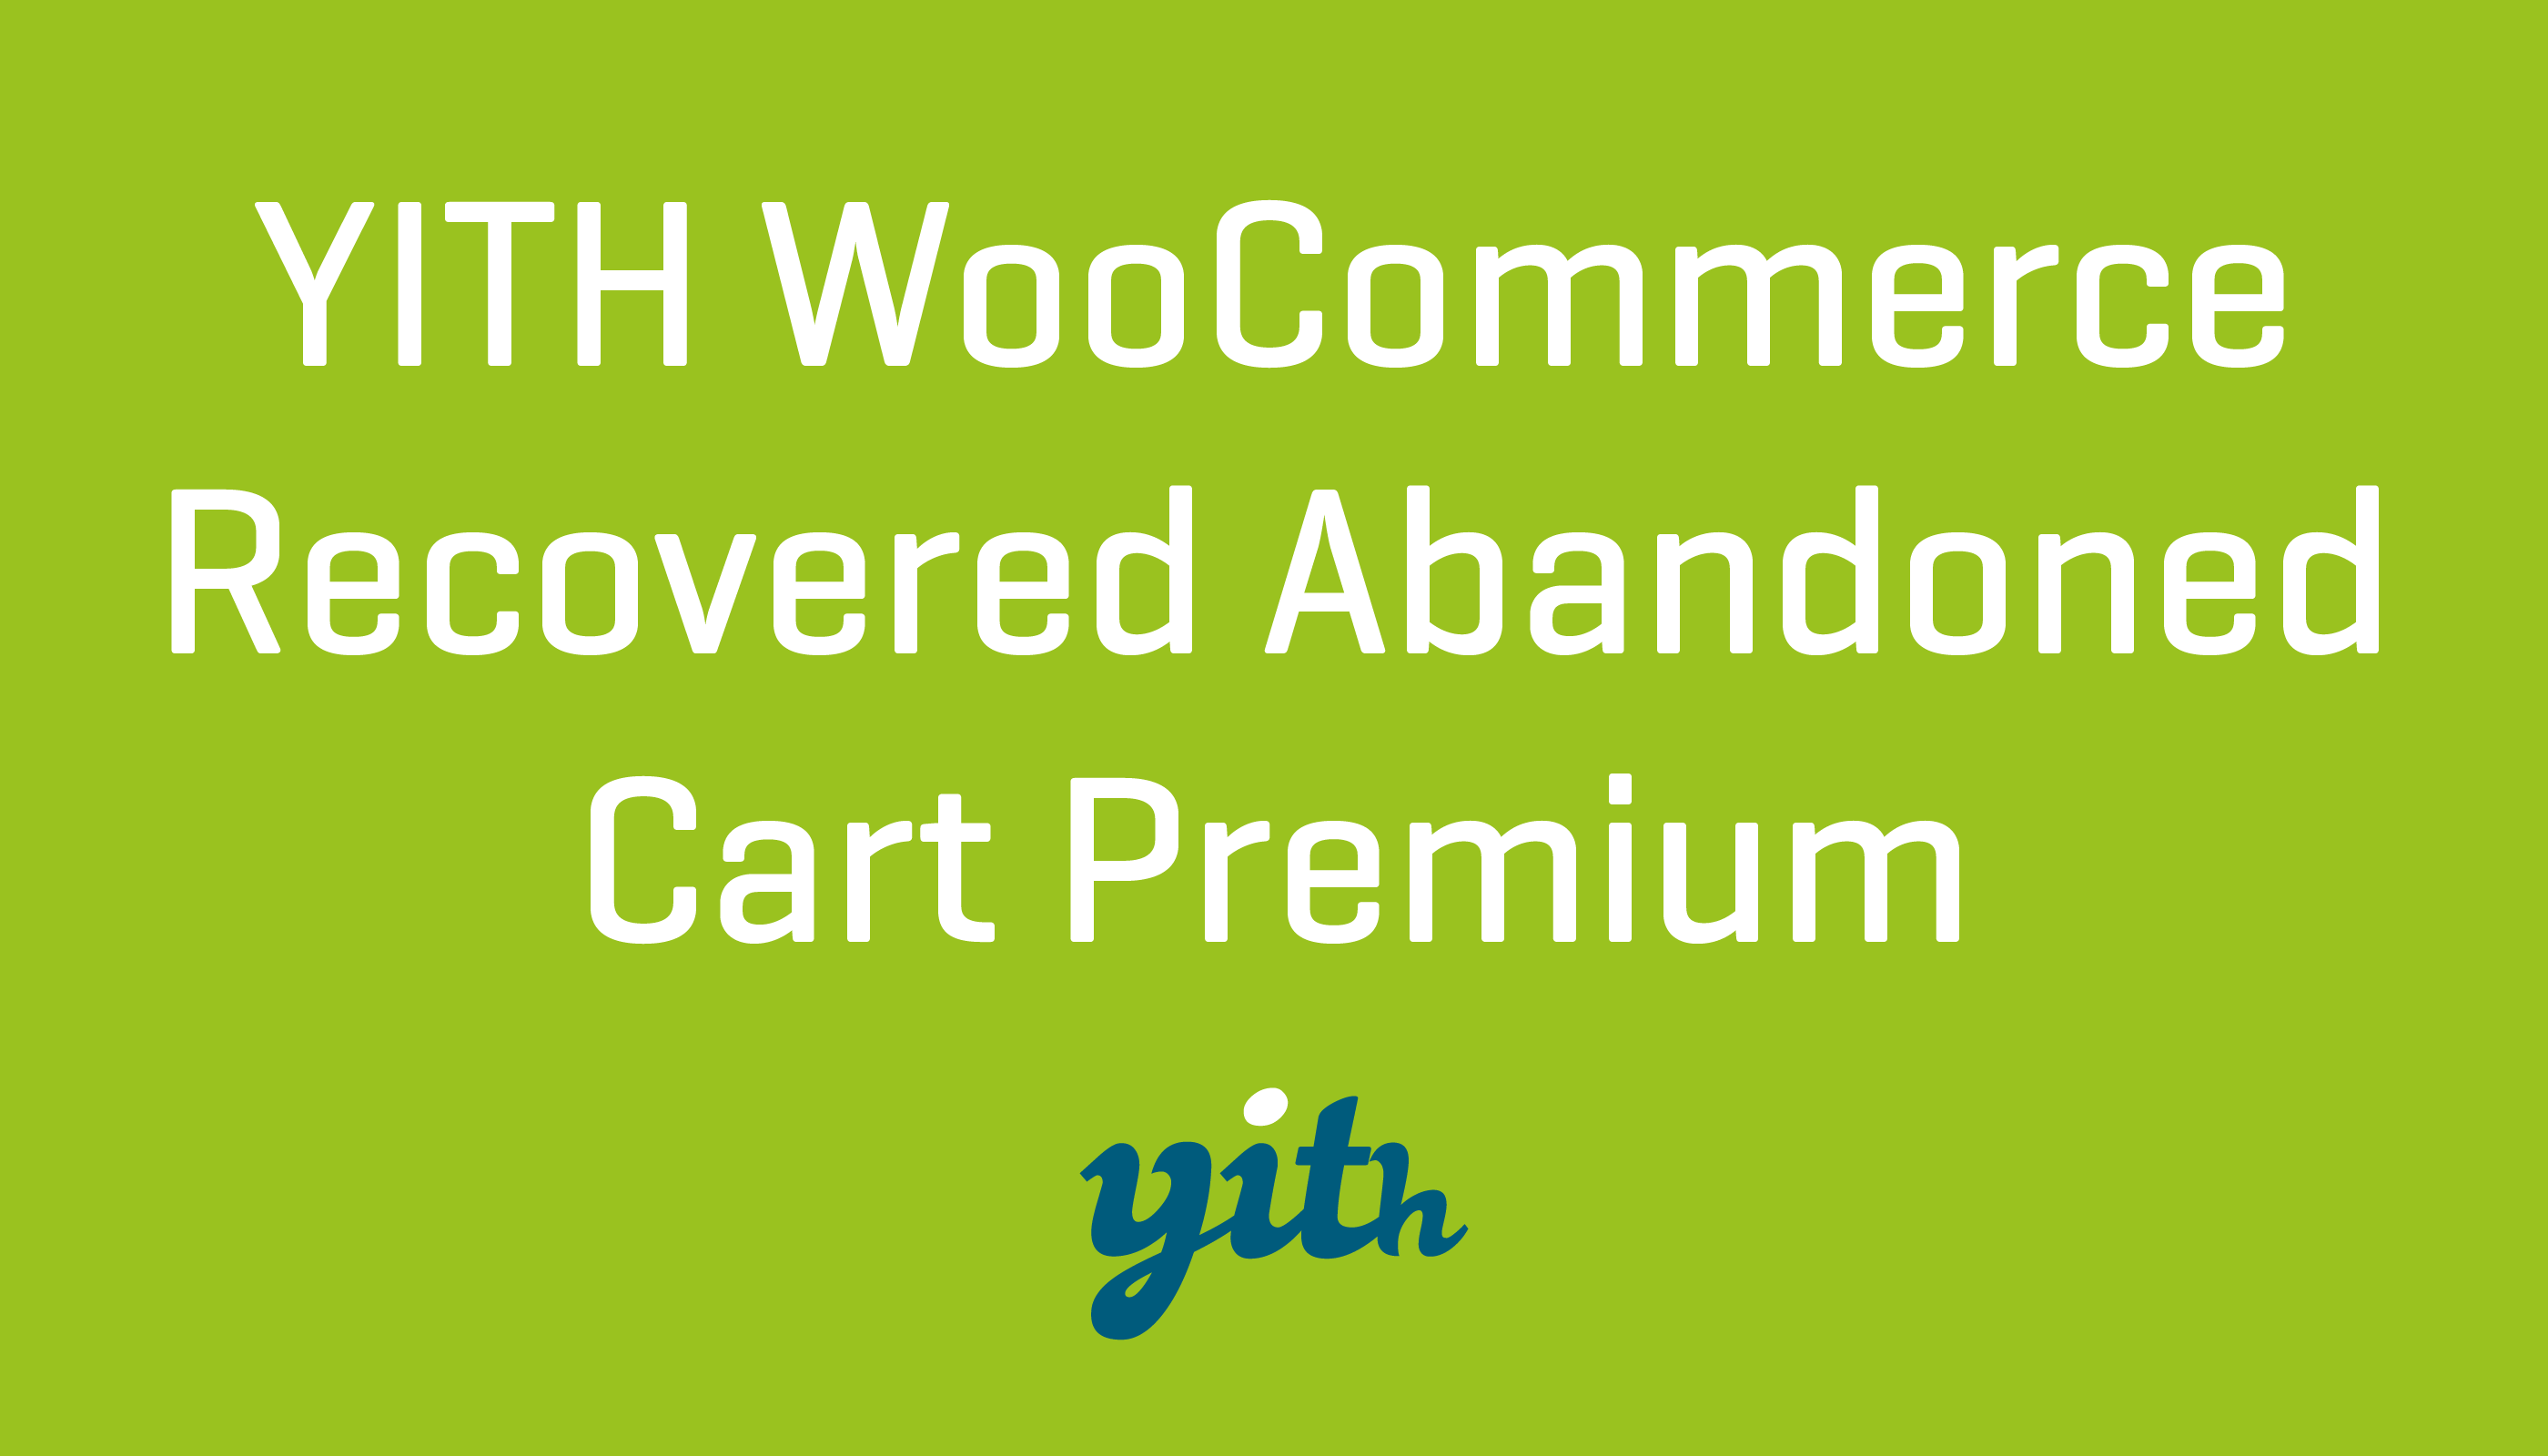 Yith WooCommerce Recovered Abandoned Cart Premium